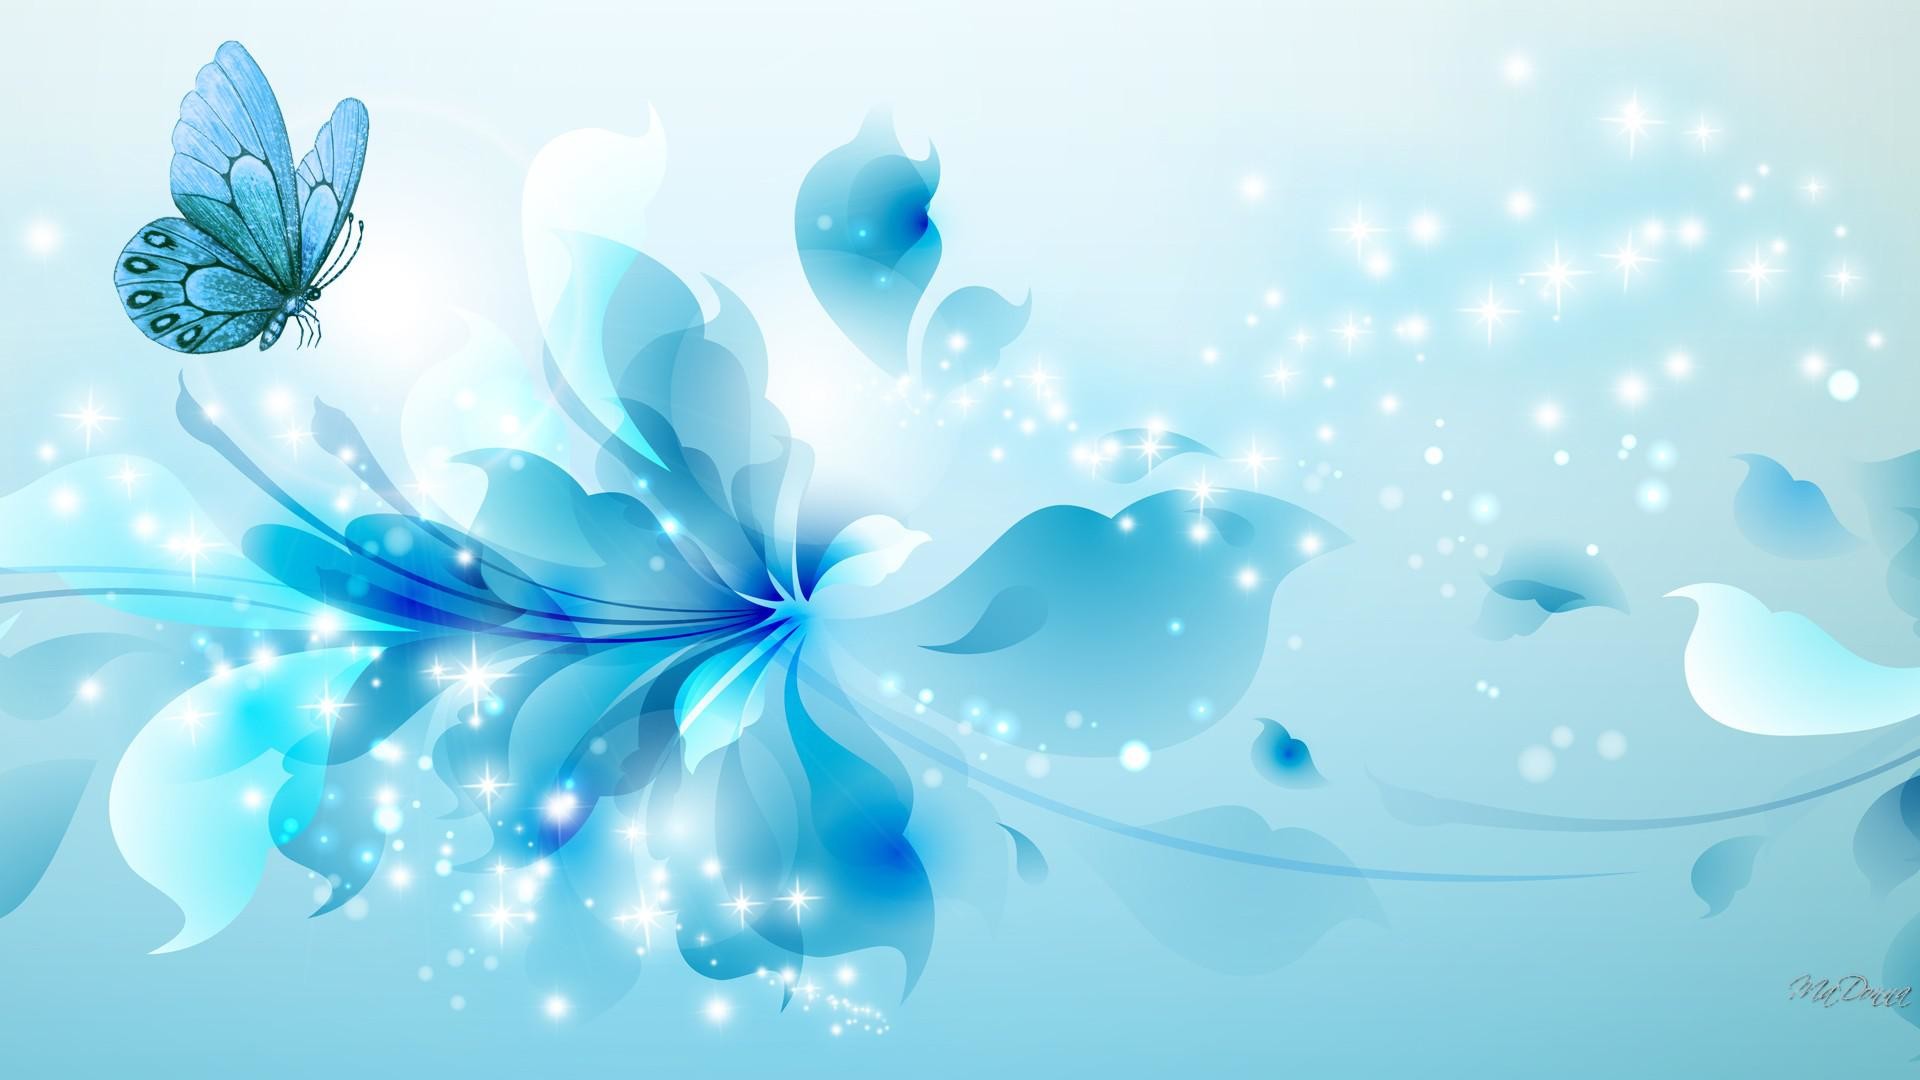 HD aqua blue wallpaper download 19201080 blue flowers Pinterest Wallpaper and Photo manipulation